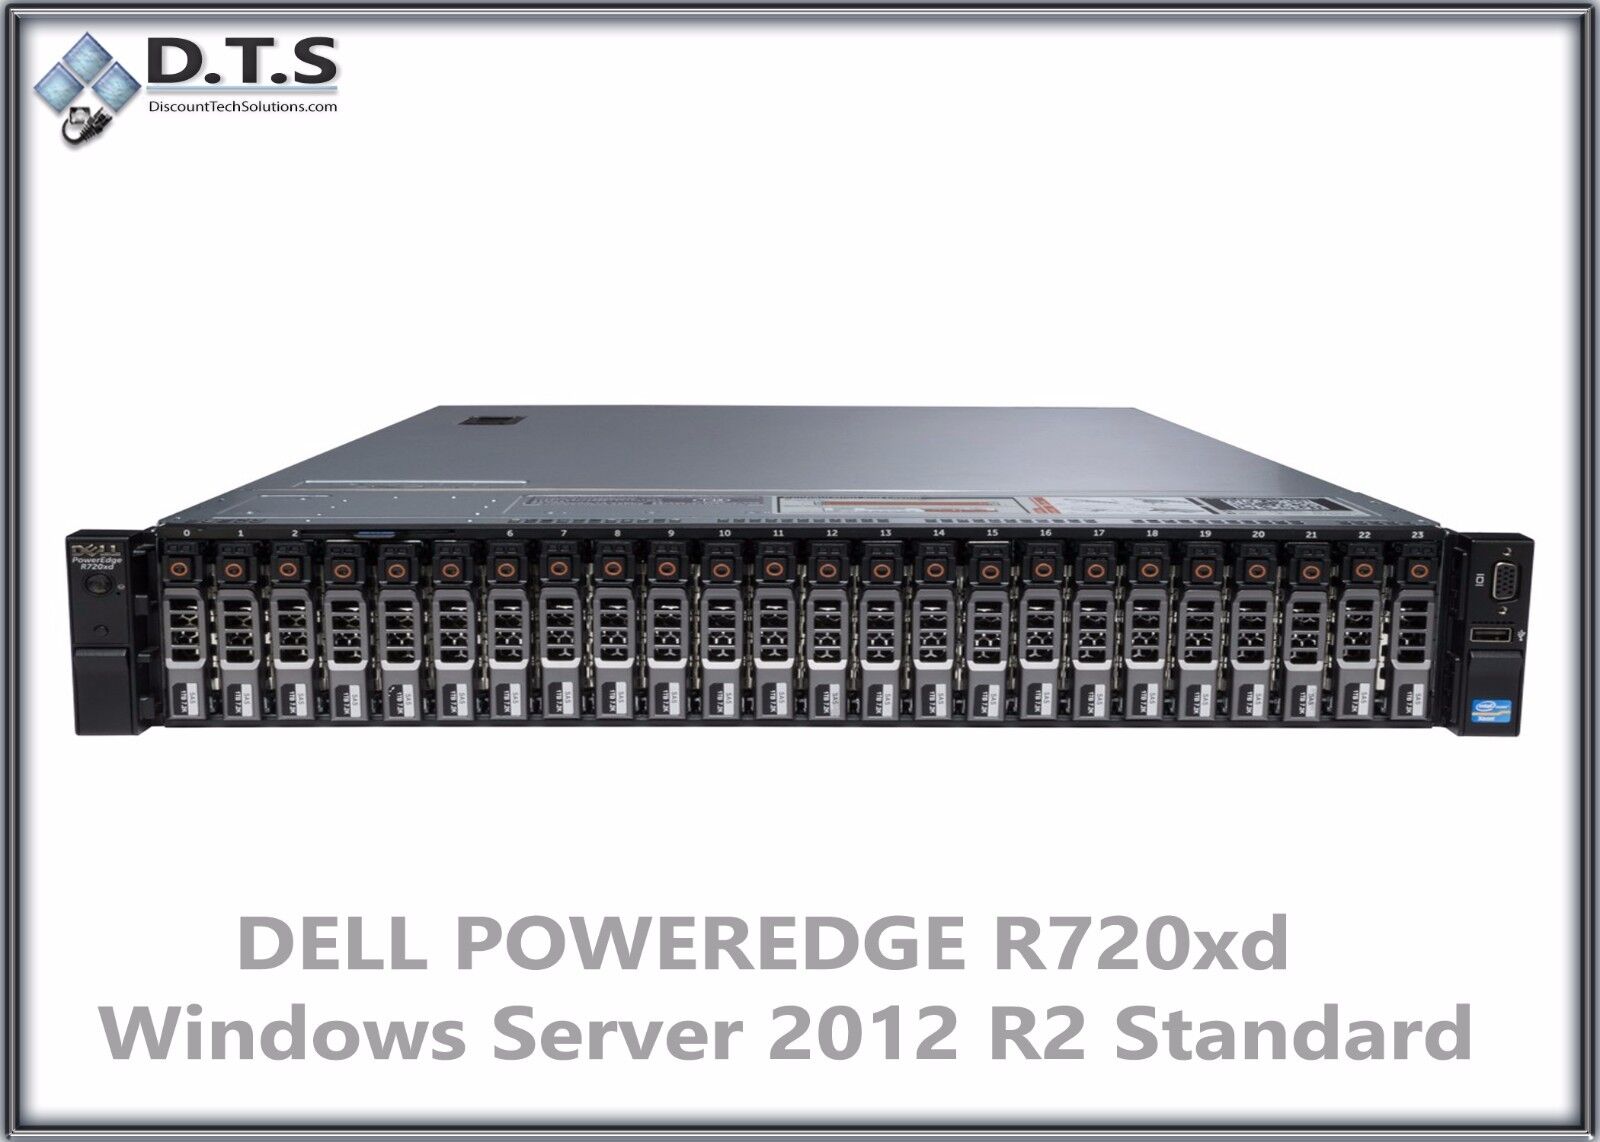 DELL POWEREDGE R720xd E5-2640 2.50Ghz H710 48Gb WINDOWS SERVER 2012 R2 STANDARD 